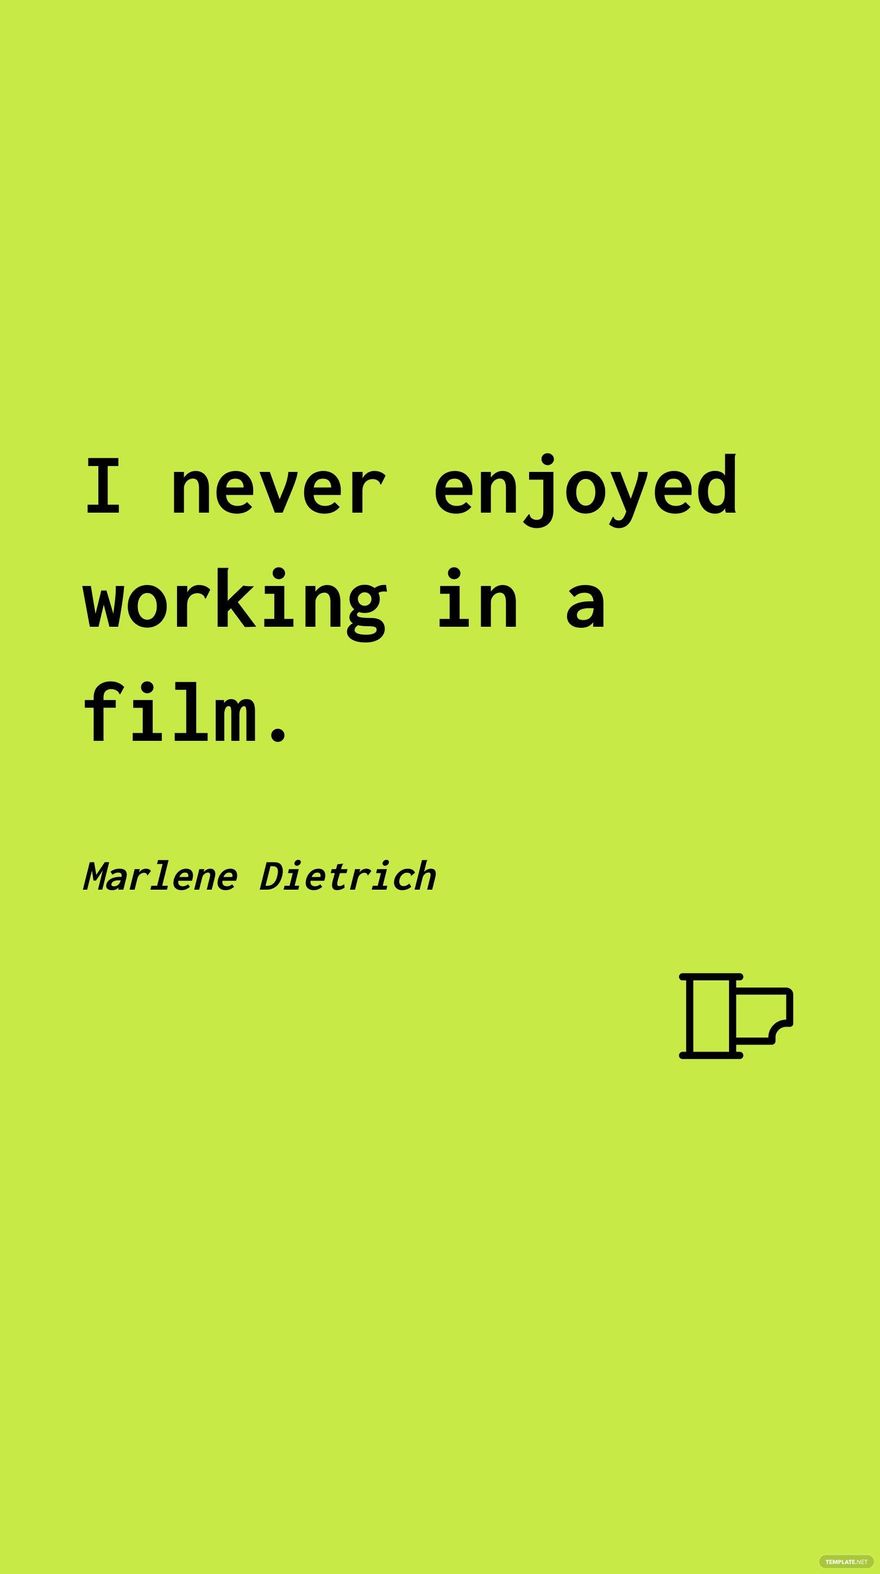 Free Marlene Dietrich - I never enjoyed working in a film. in JPG